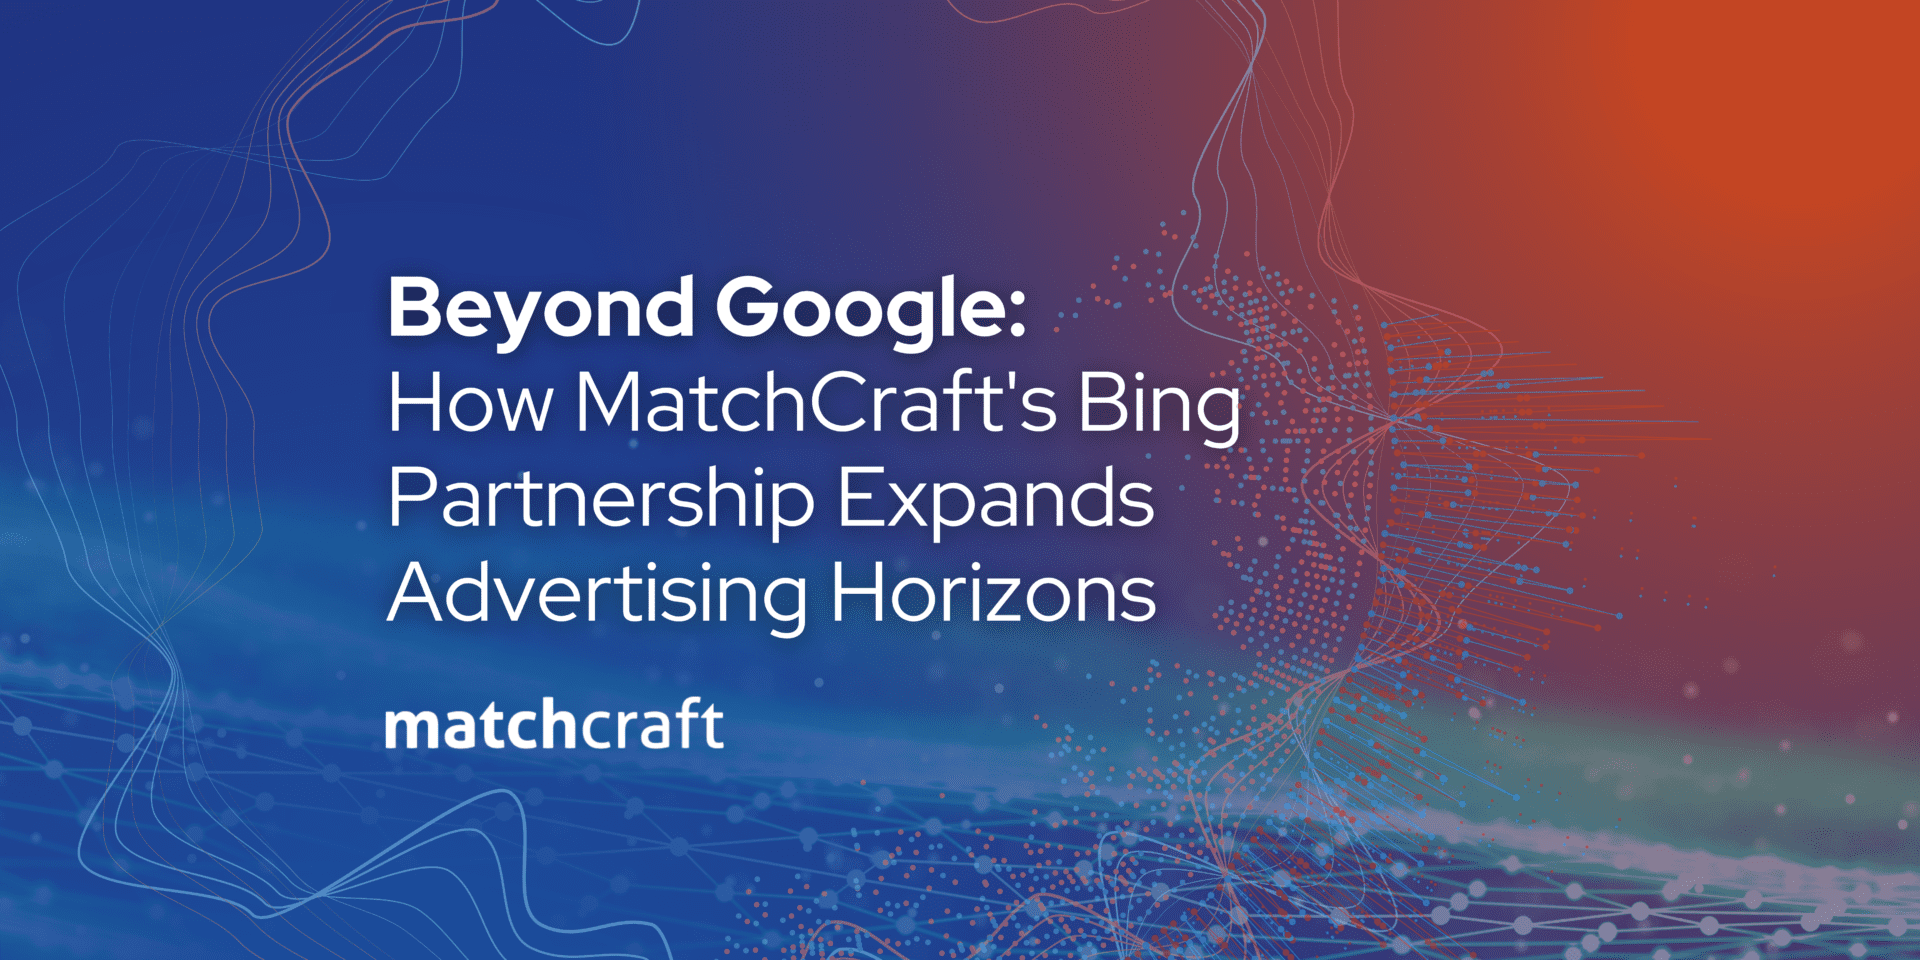 Beyond Google: How MatchCraft’s Bing Partnership Expands Advertising Horizons